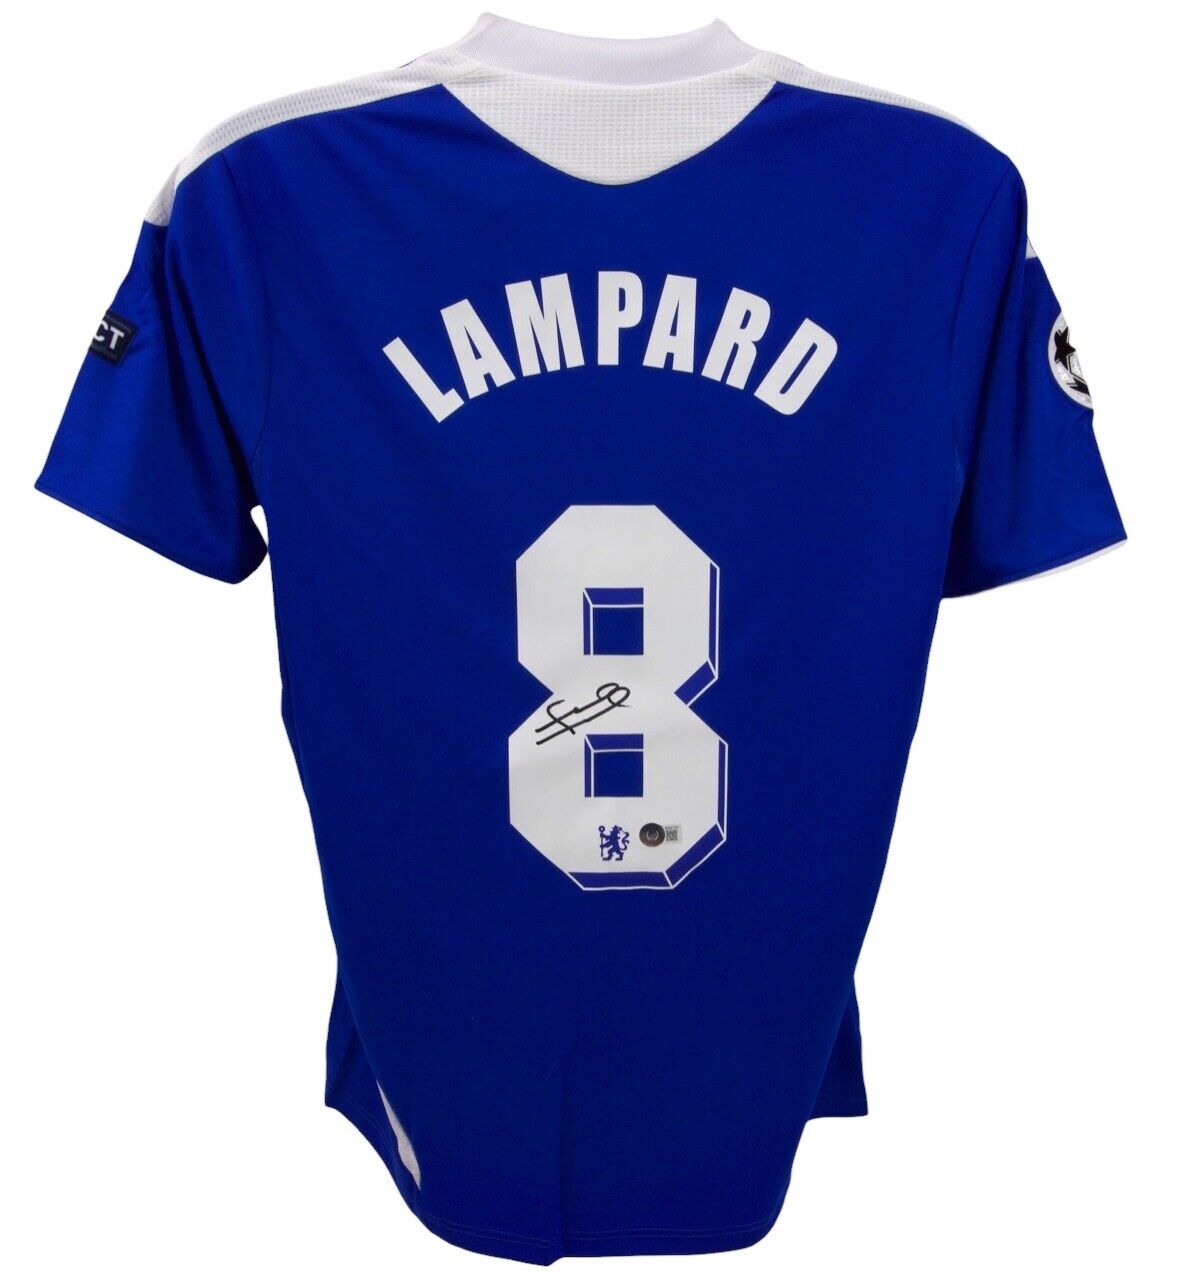 Frank Lampard Signed Chelsea Blue Home Soccer Jersey #8 - Beckett COA